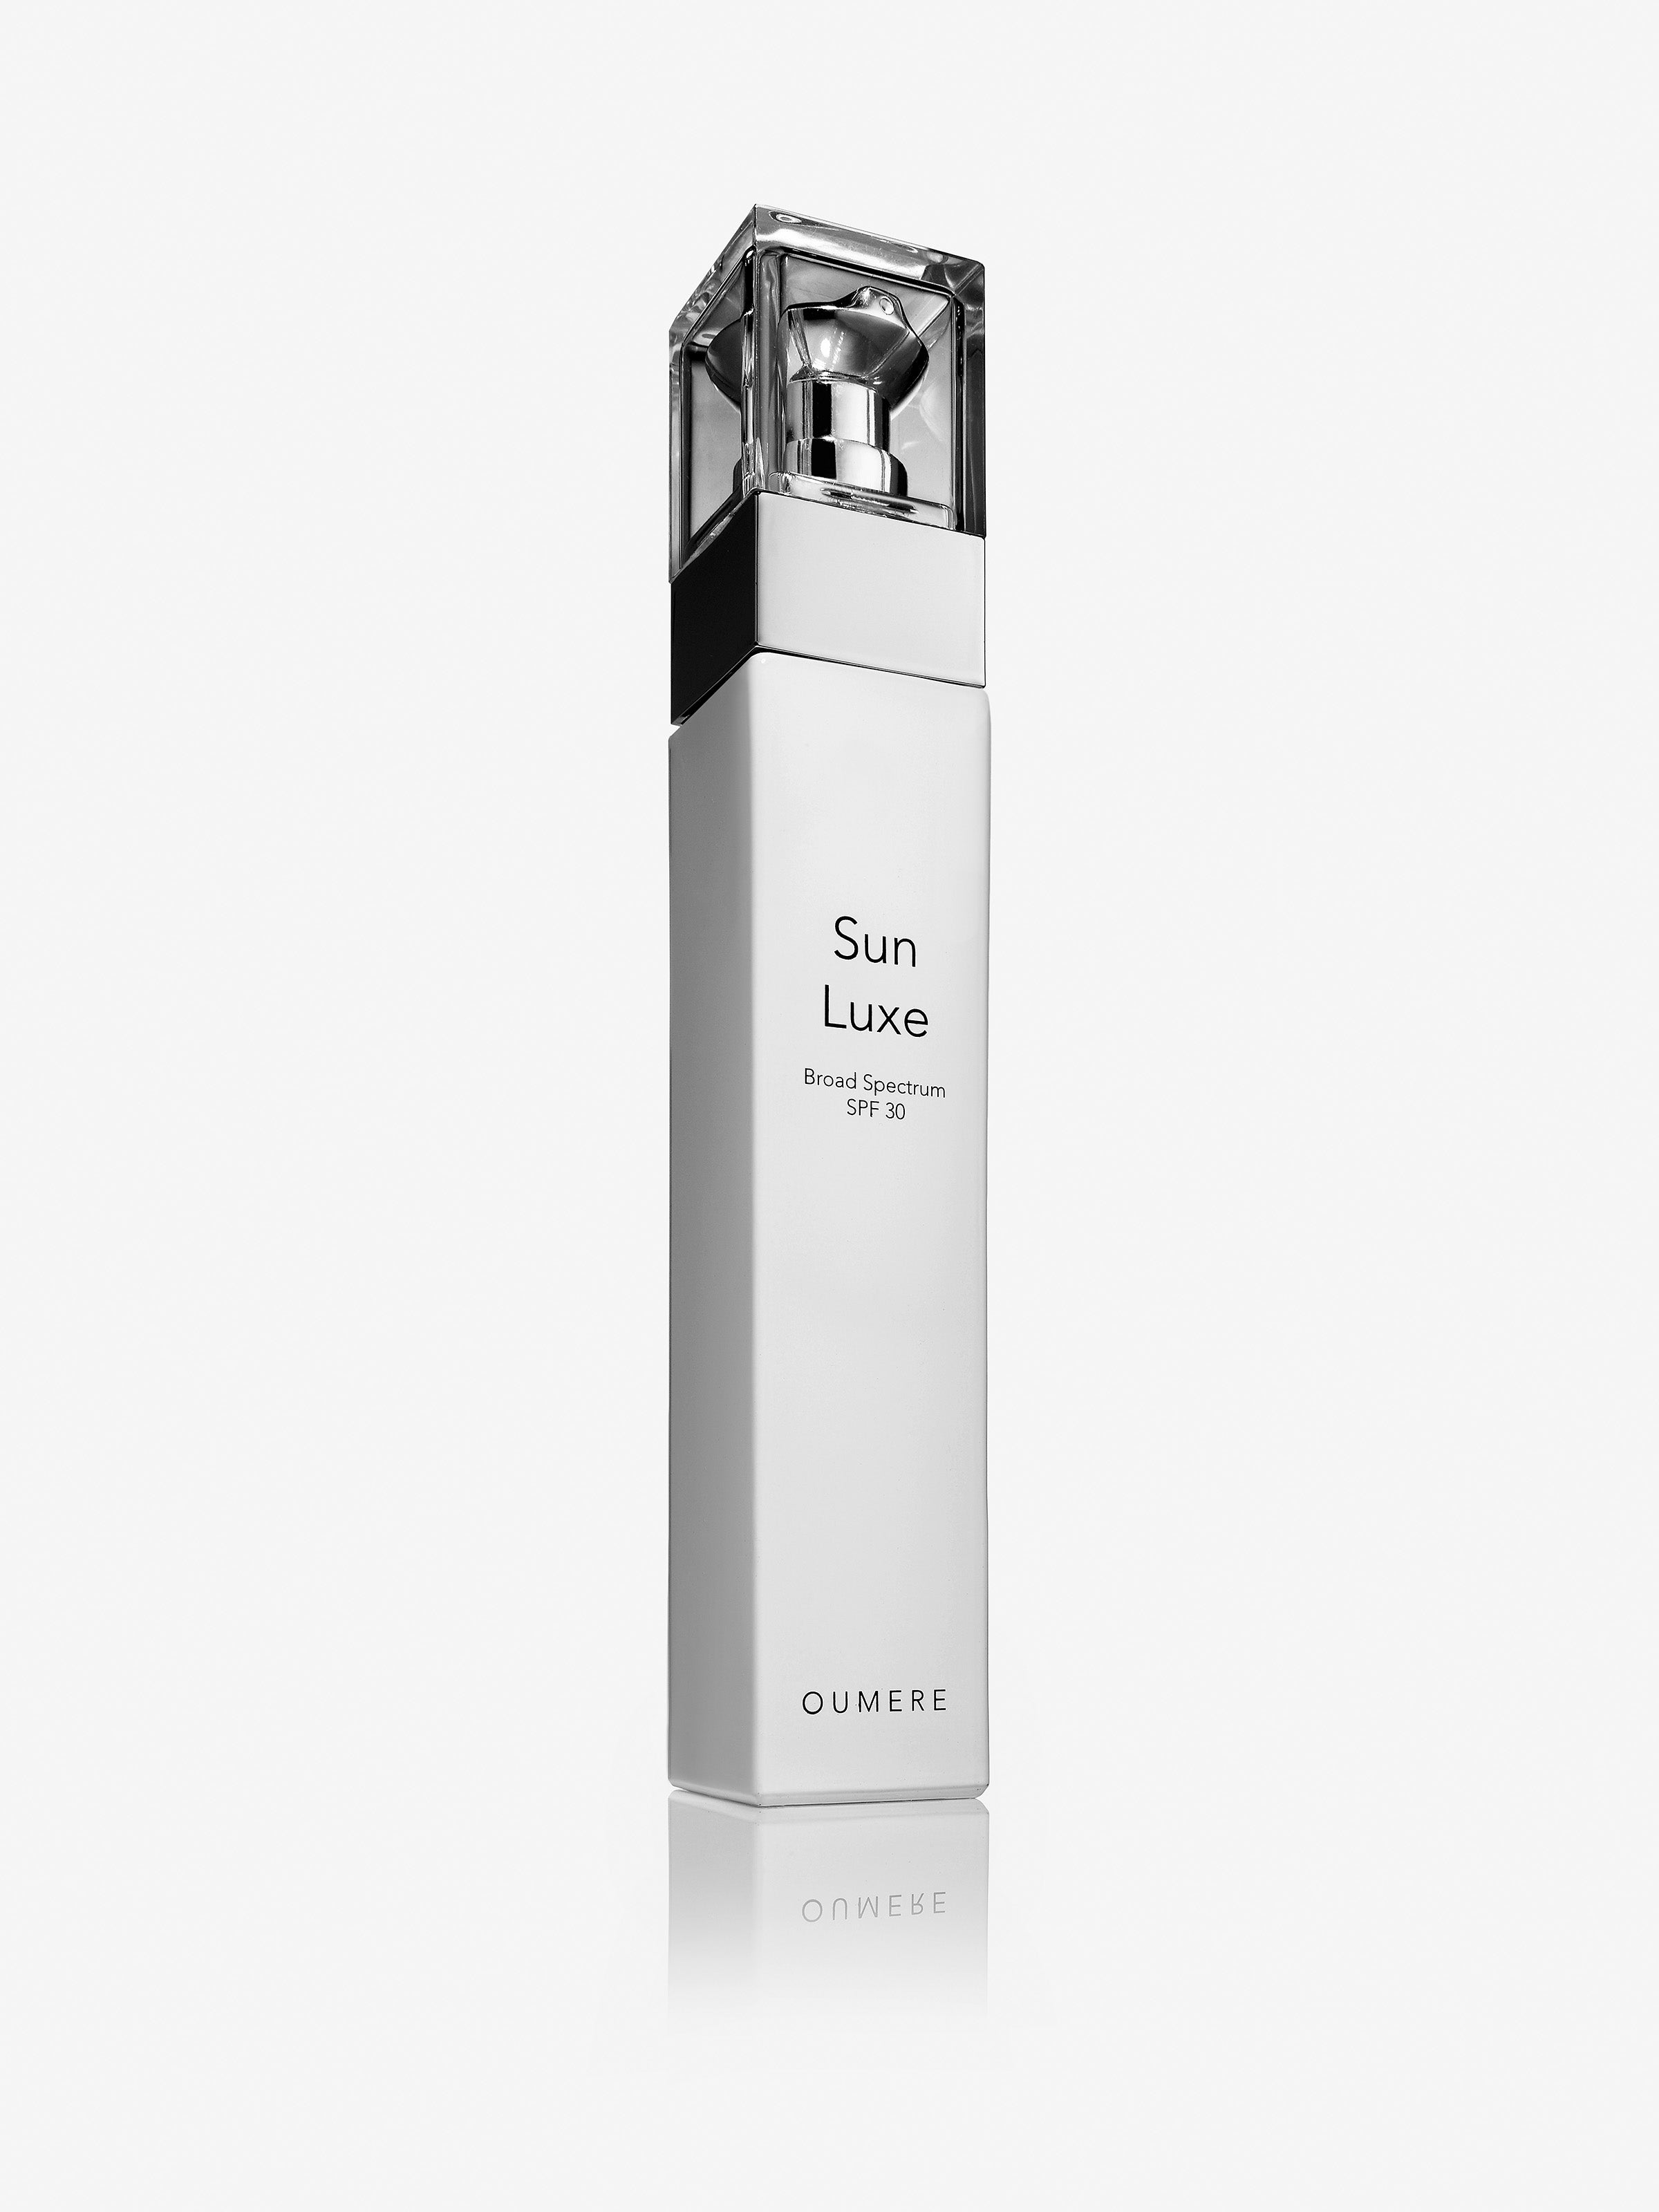 Glass bottle of Sun Luxe Mineral Daily Sunscreen - O U M E R E